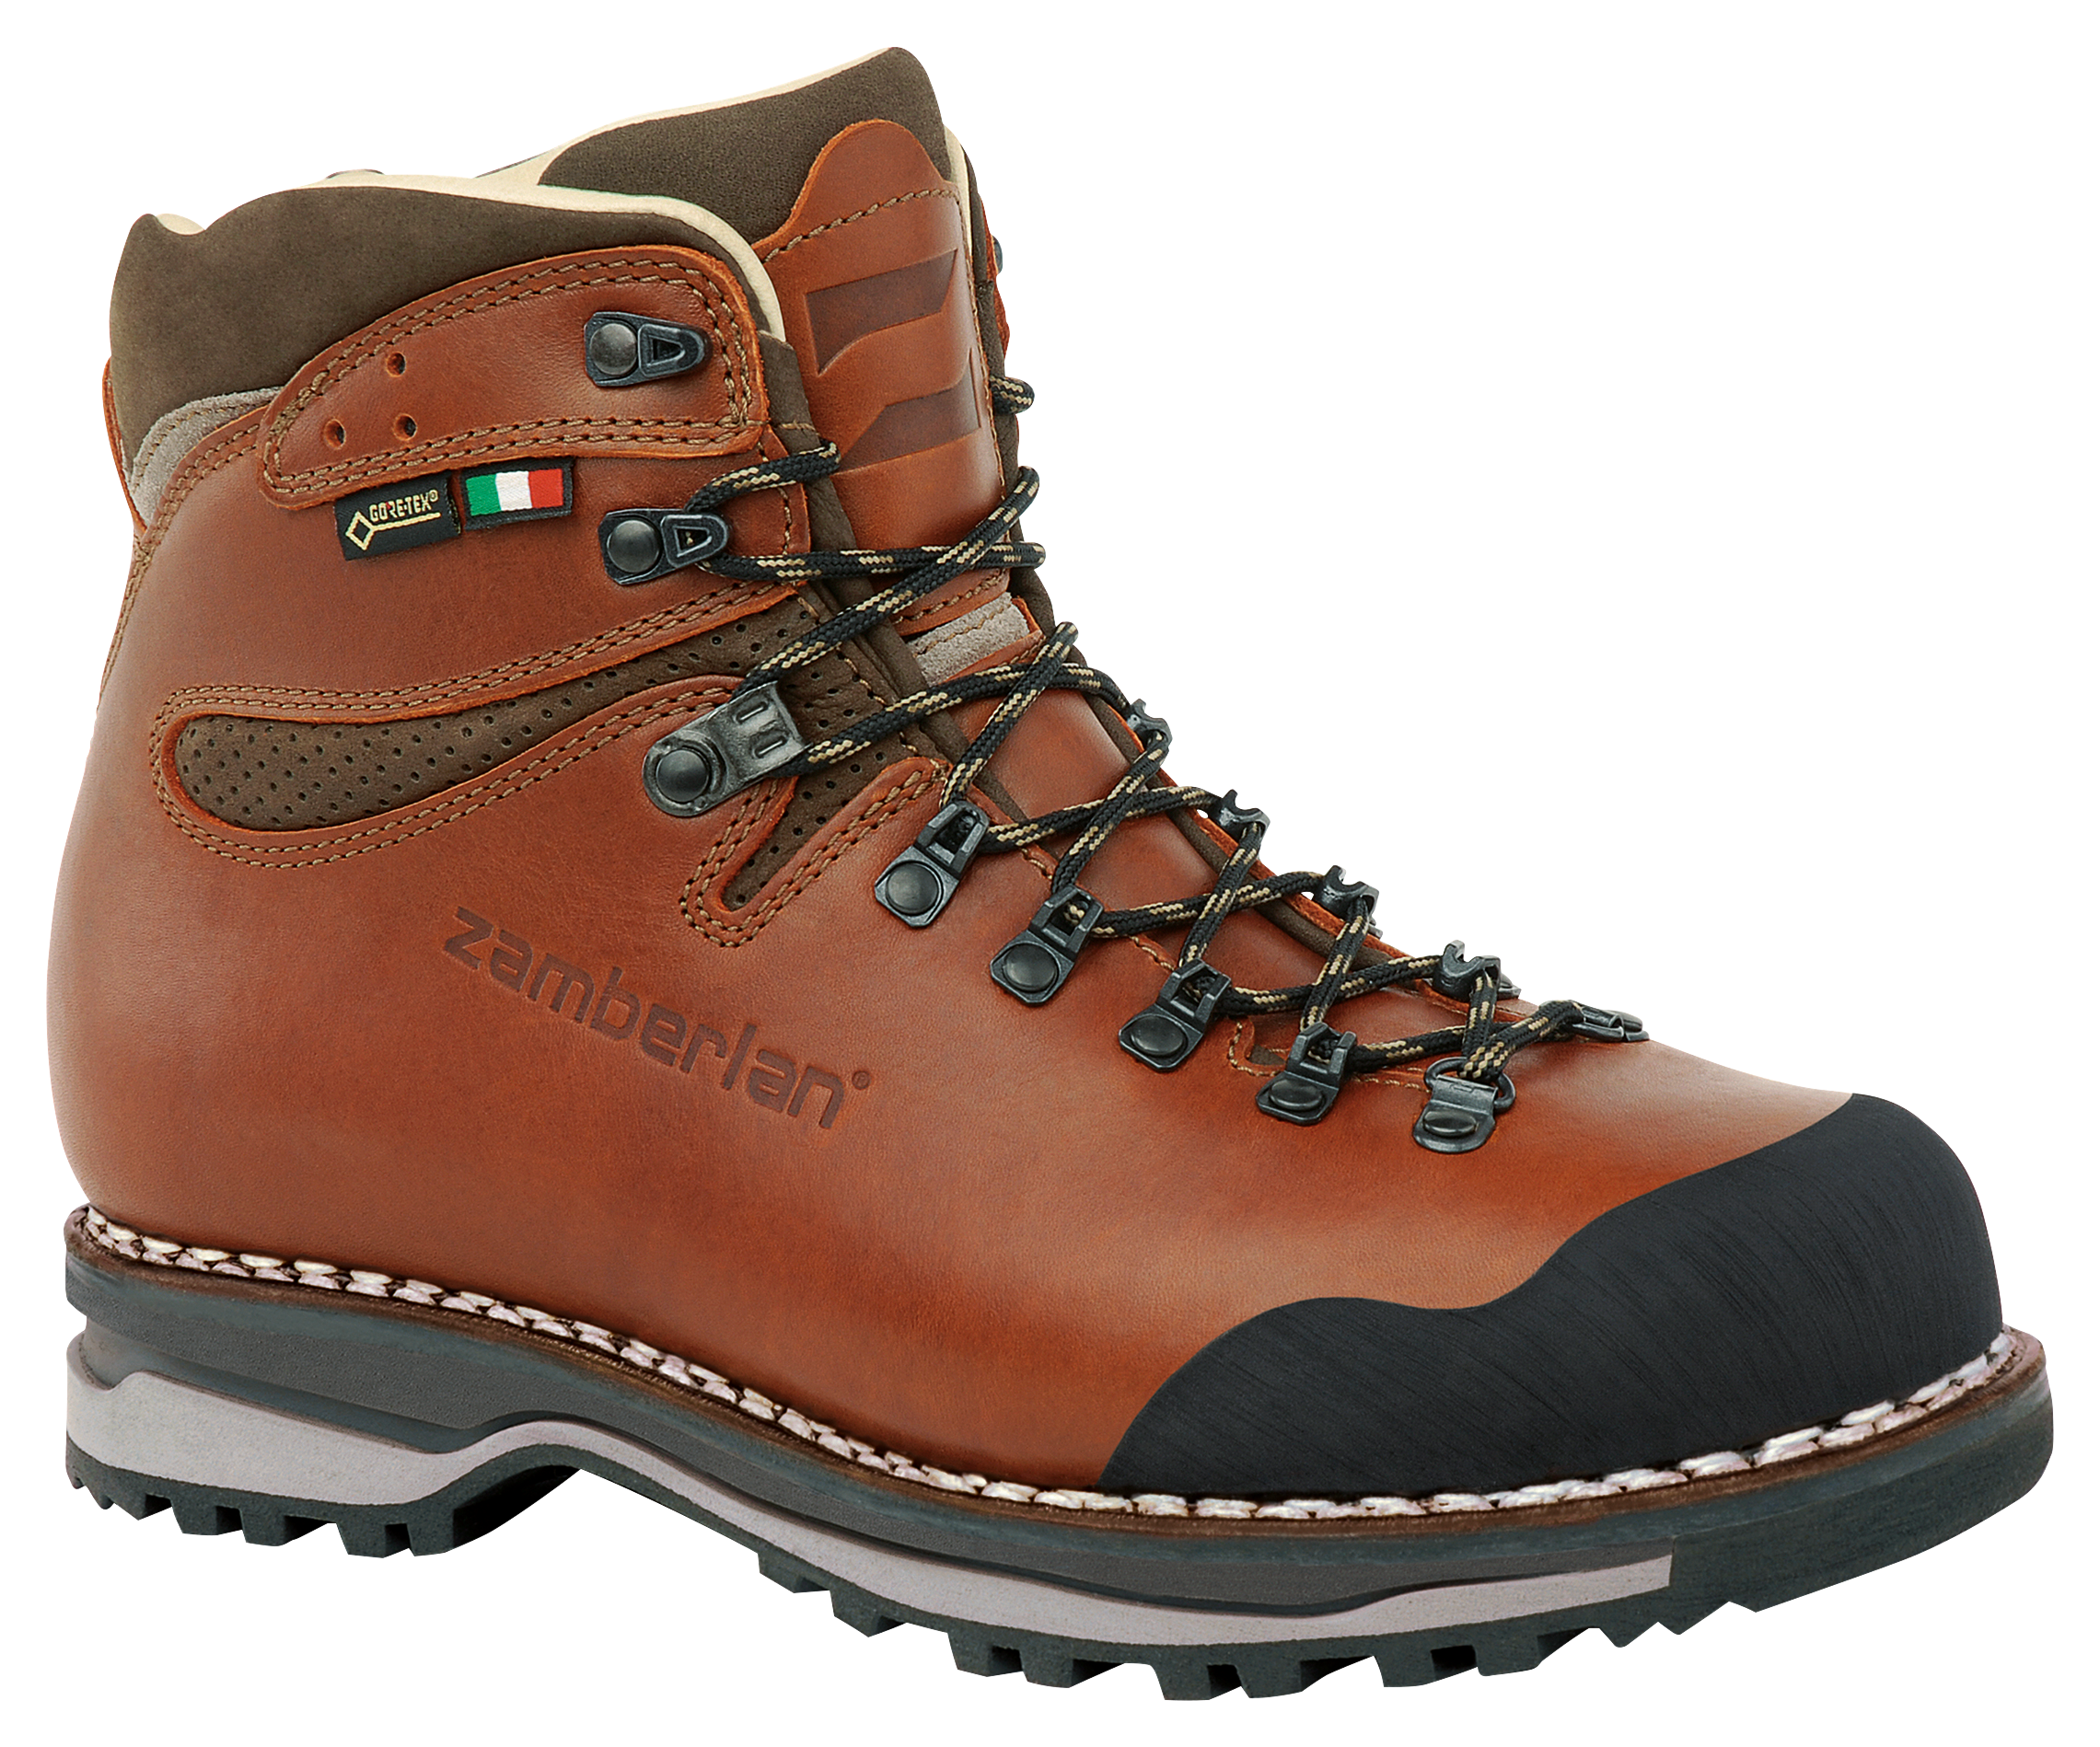 Zamberlan 1025 Tofane NW GTX RR Waterproof Hiking Boots for Men - Waxed Brick - 13M